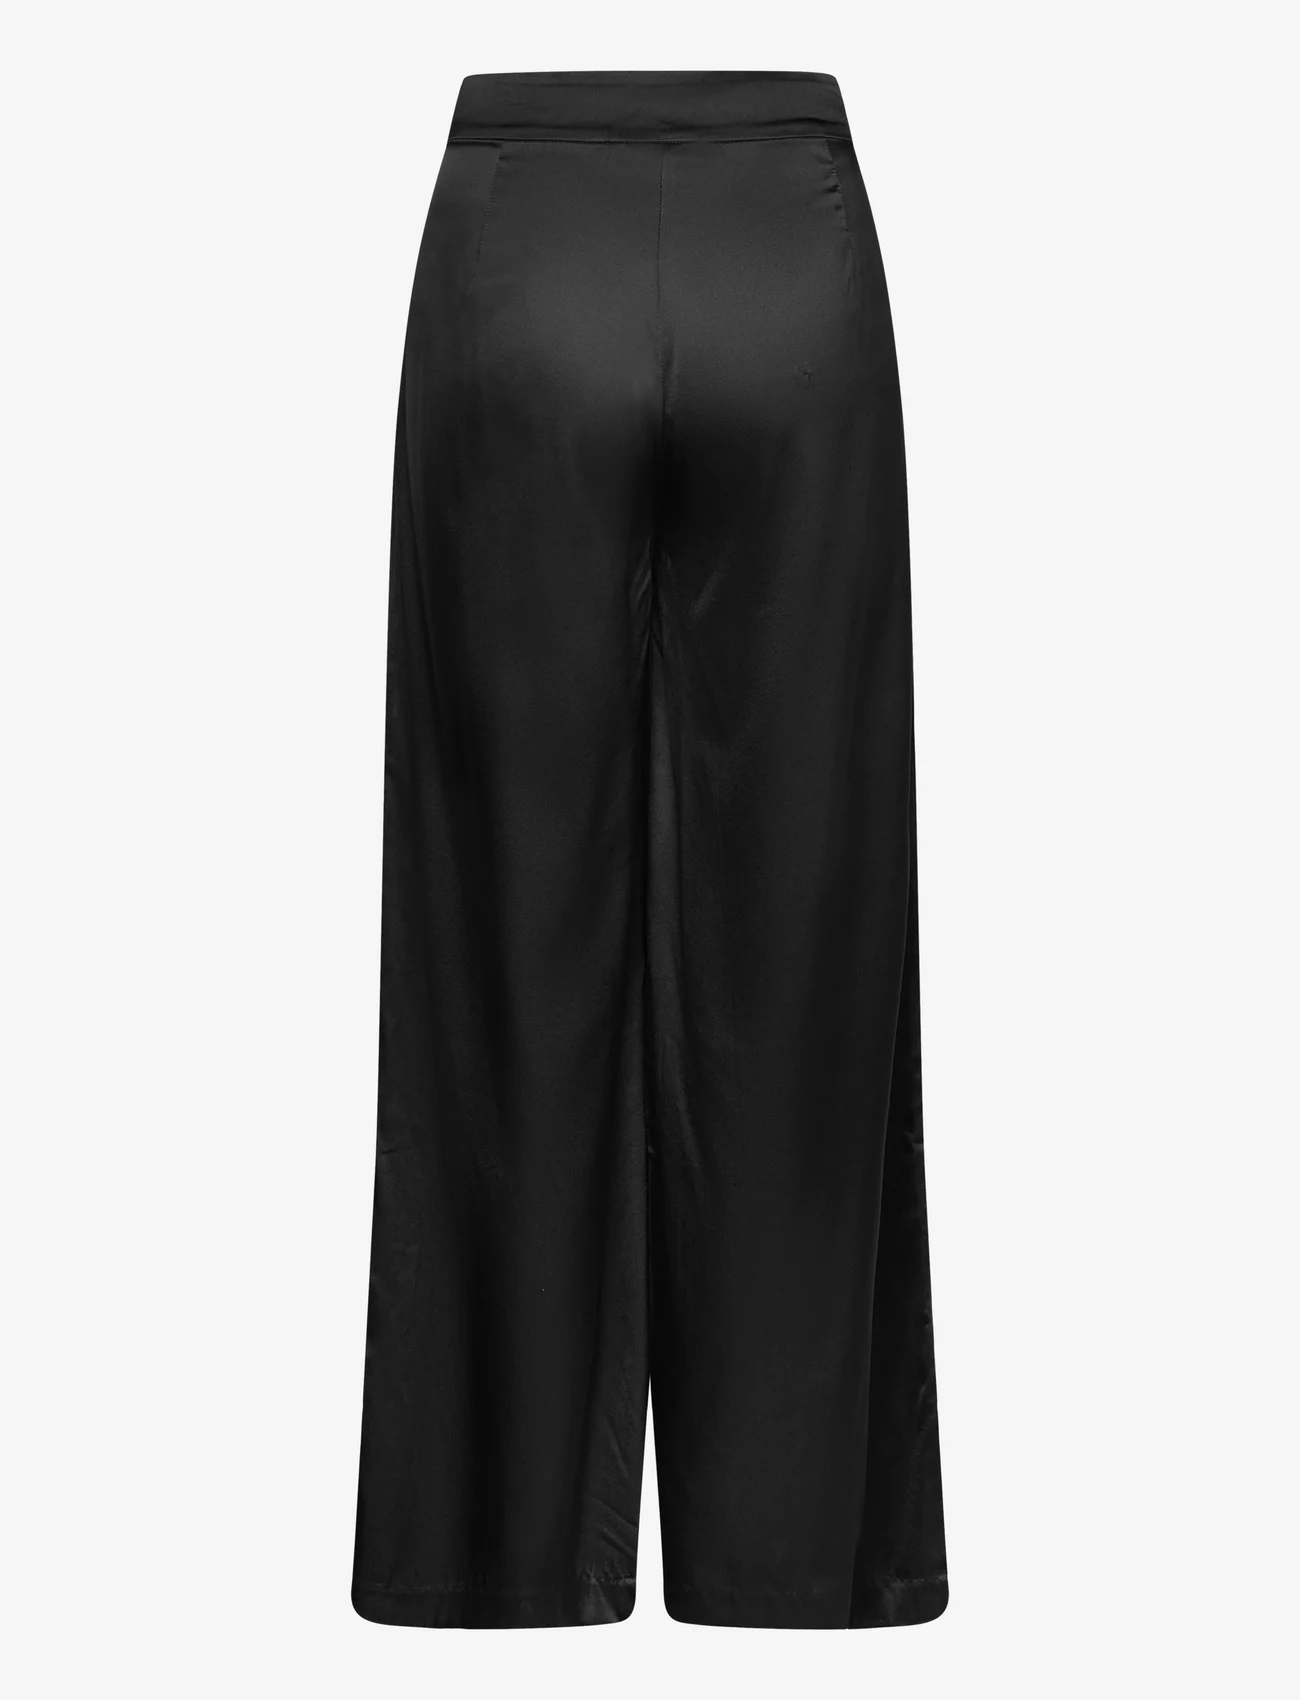 Rosemunde - Silk trousers - black - 1